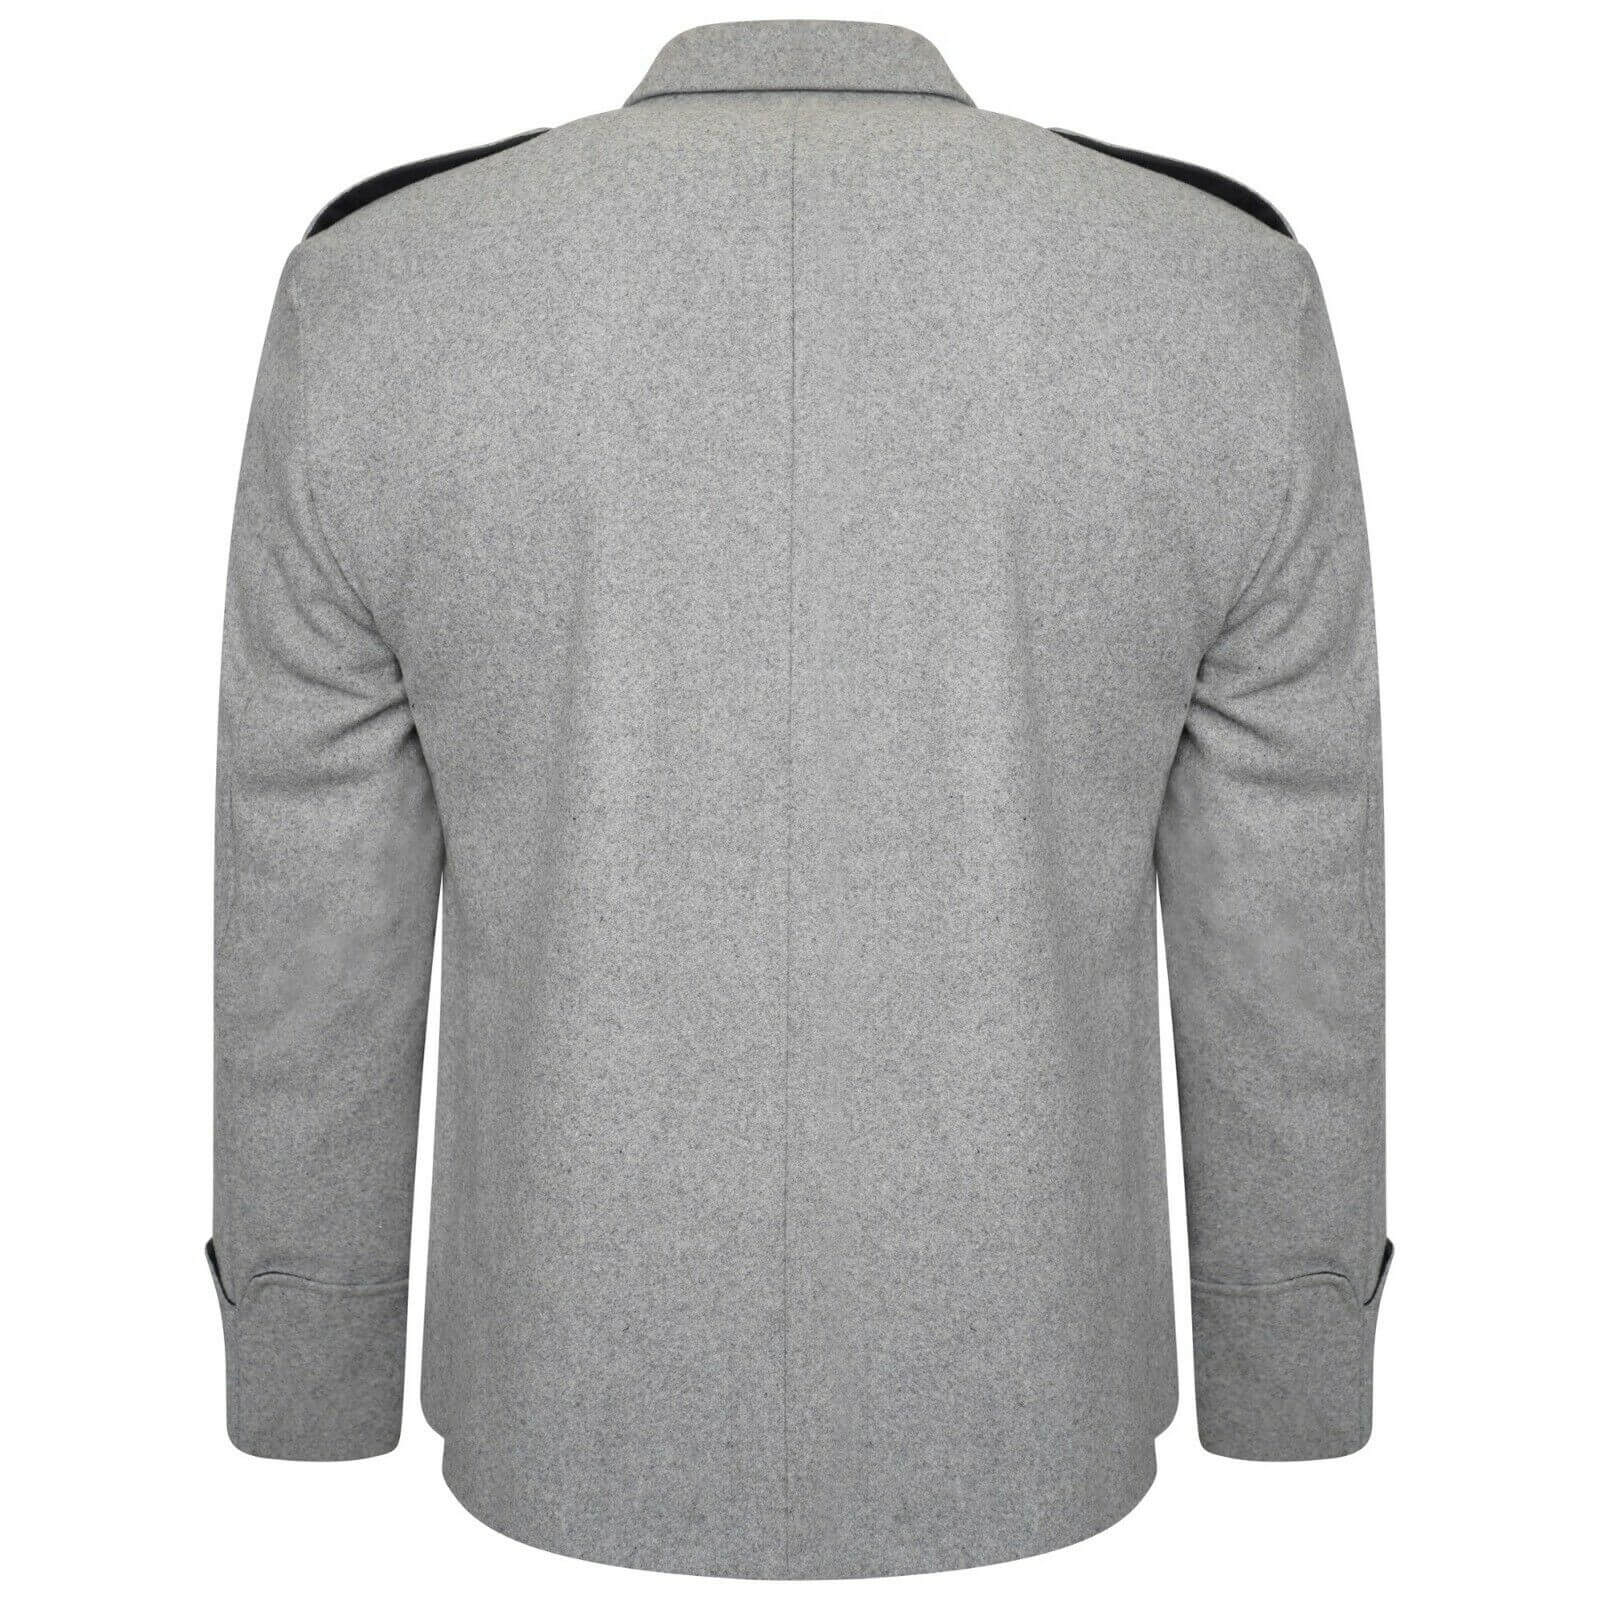 Argyle kilt Jacket & Waistcoat/Vest,Scottish Argyle Jacket Dark Grey Blazer Wool 